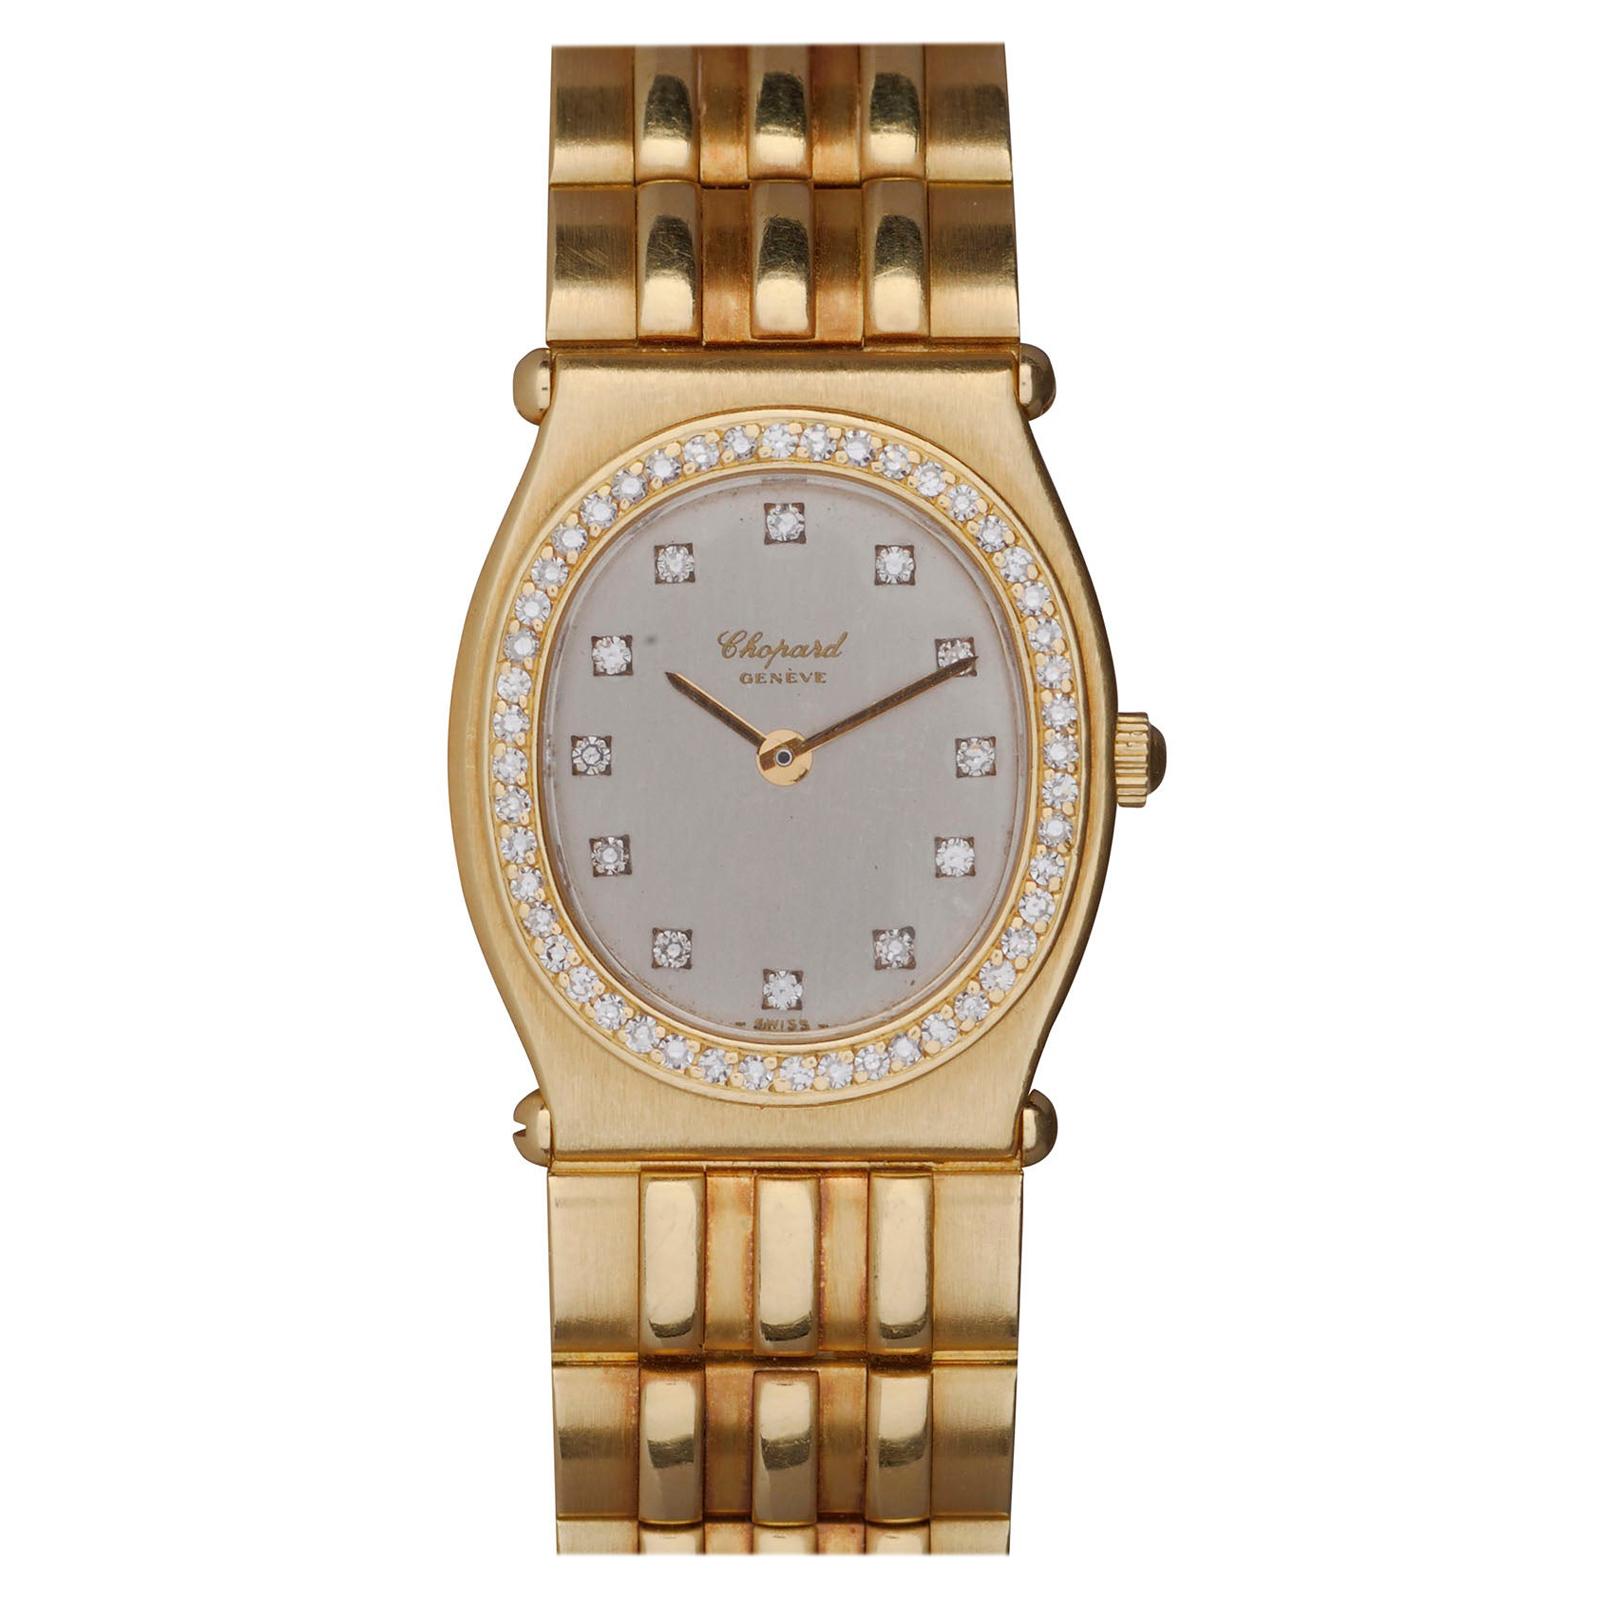 Chopard Monte Carlo Diamond Ladies 18k Wrist Watch